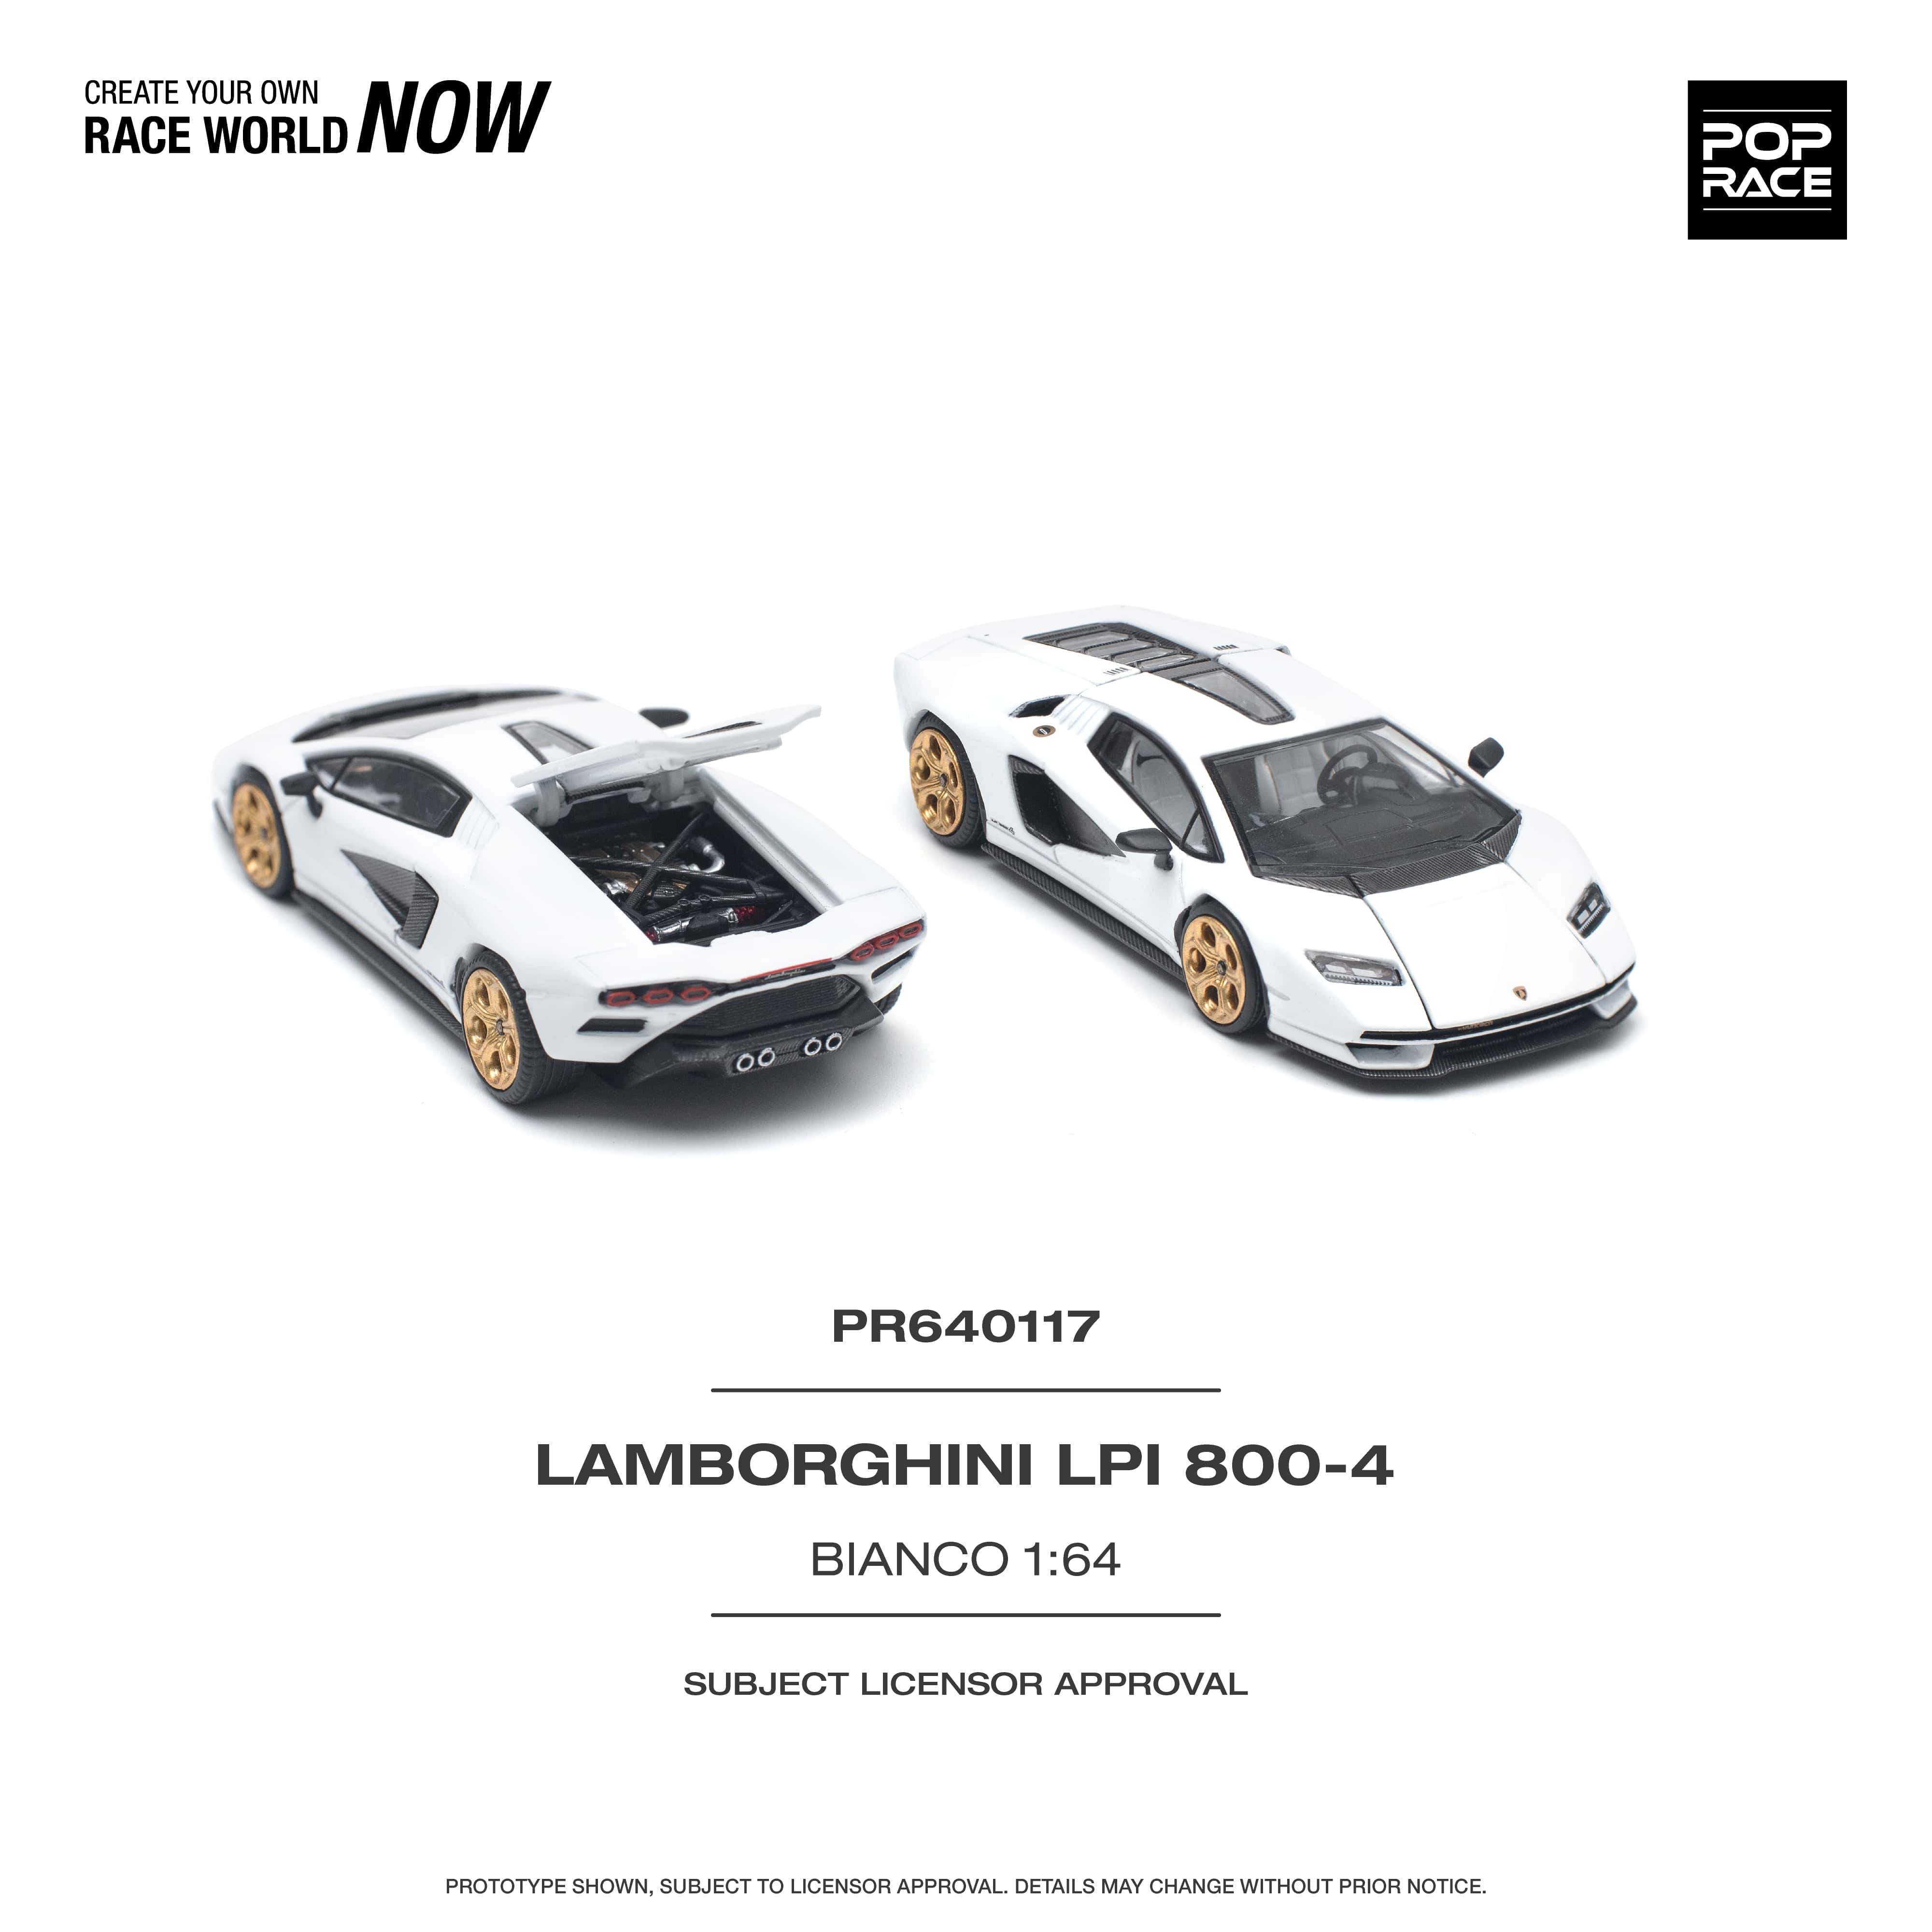 Pop Race - Pre-Order - Lamborghini Countach LPI 800-4, bianco siderale - PR640117 - 1:64